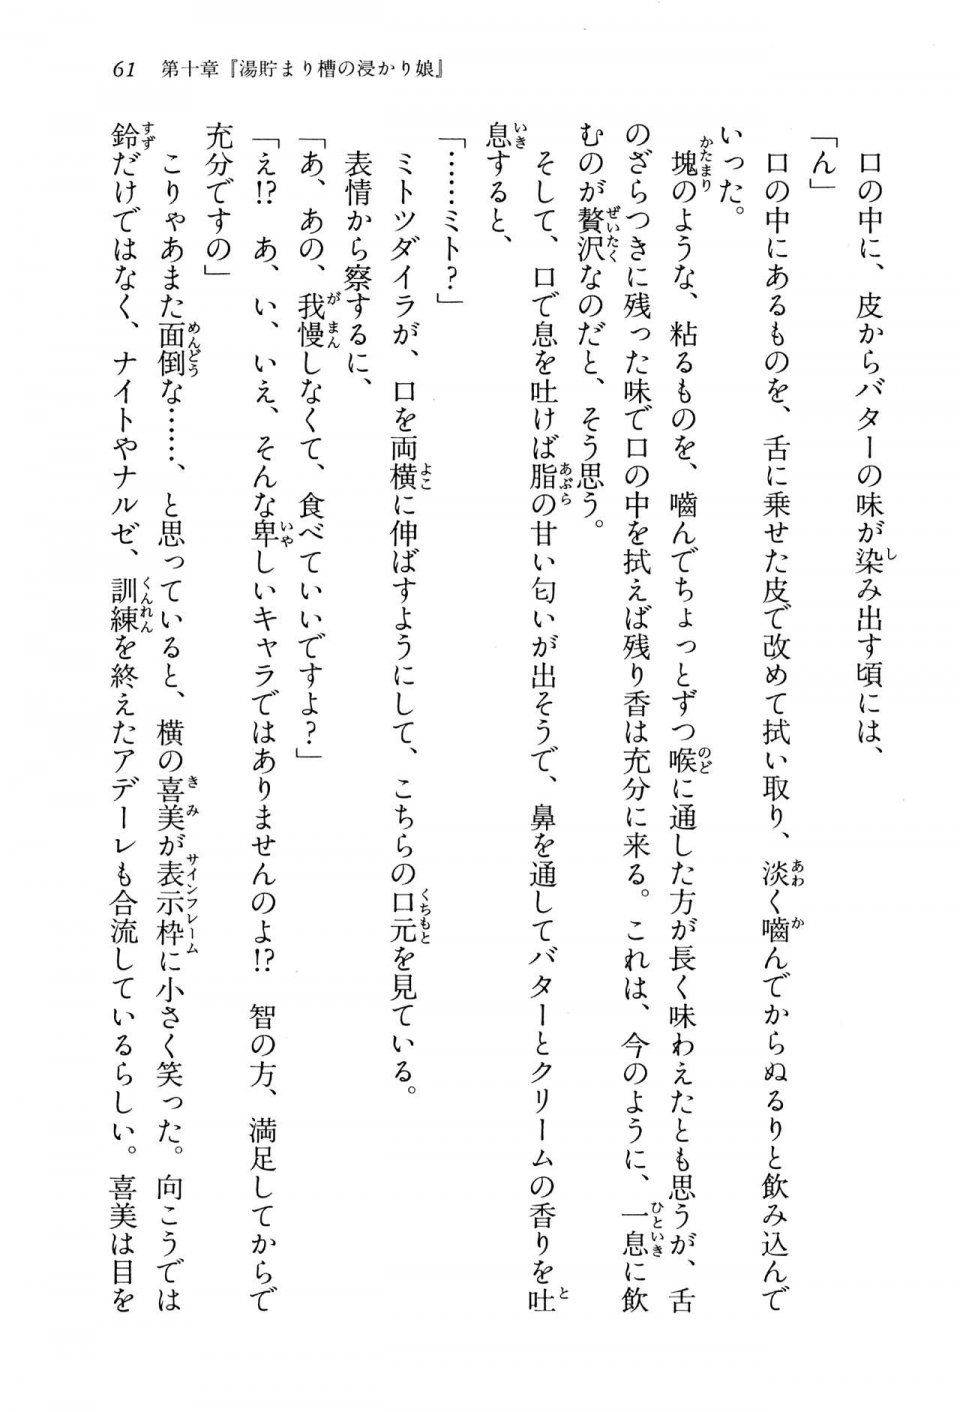 Kyoukai Senjou no Horizon BD Special Mininovel Vol 3(2A) - Photo #65